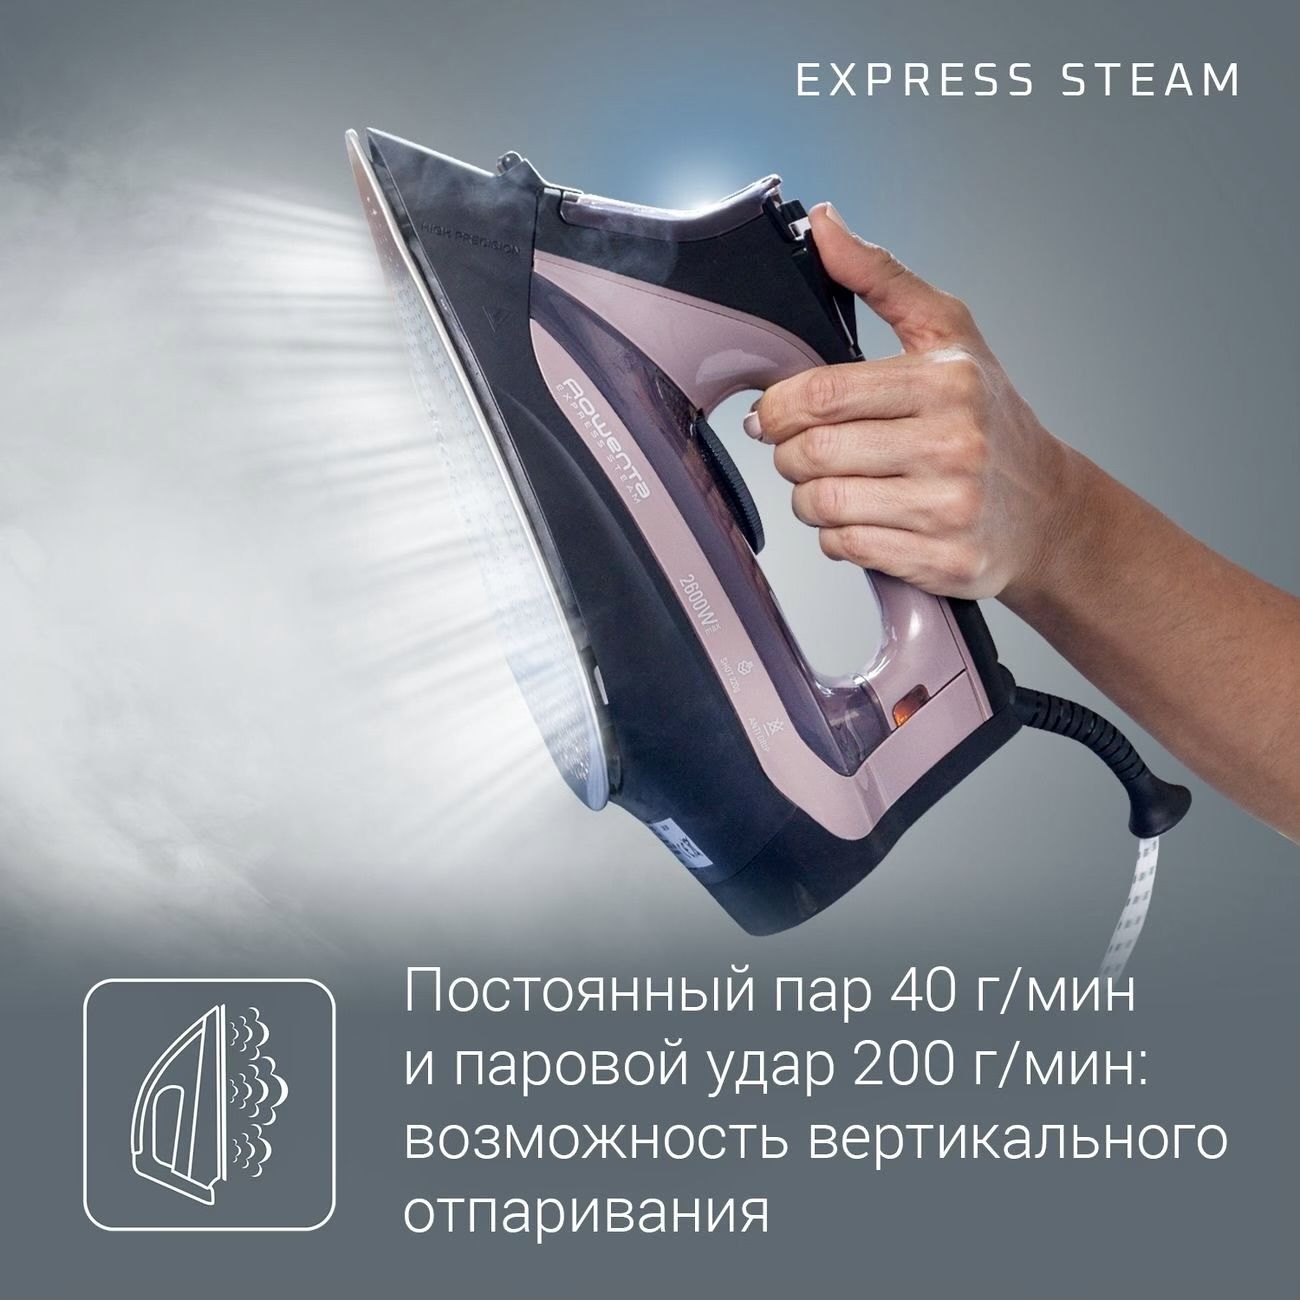 Express steam утюг фото 85